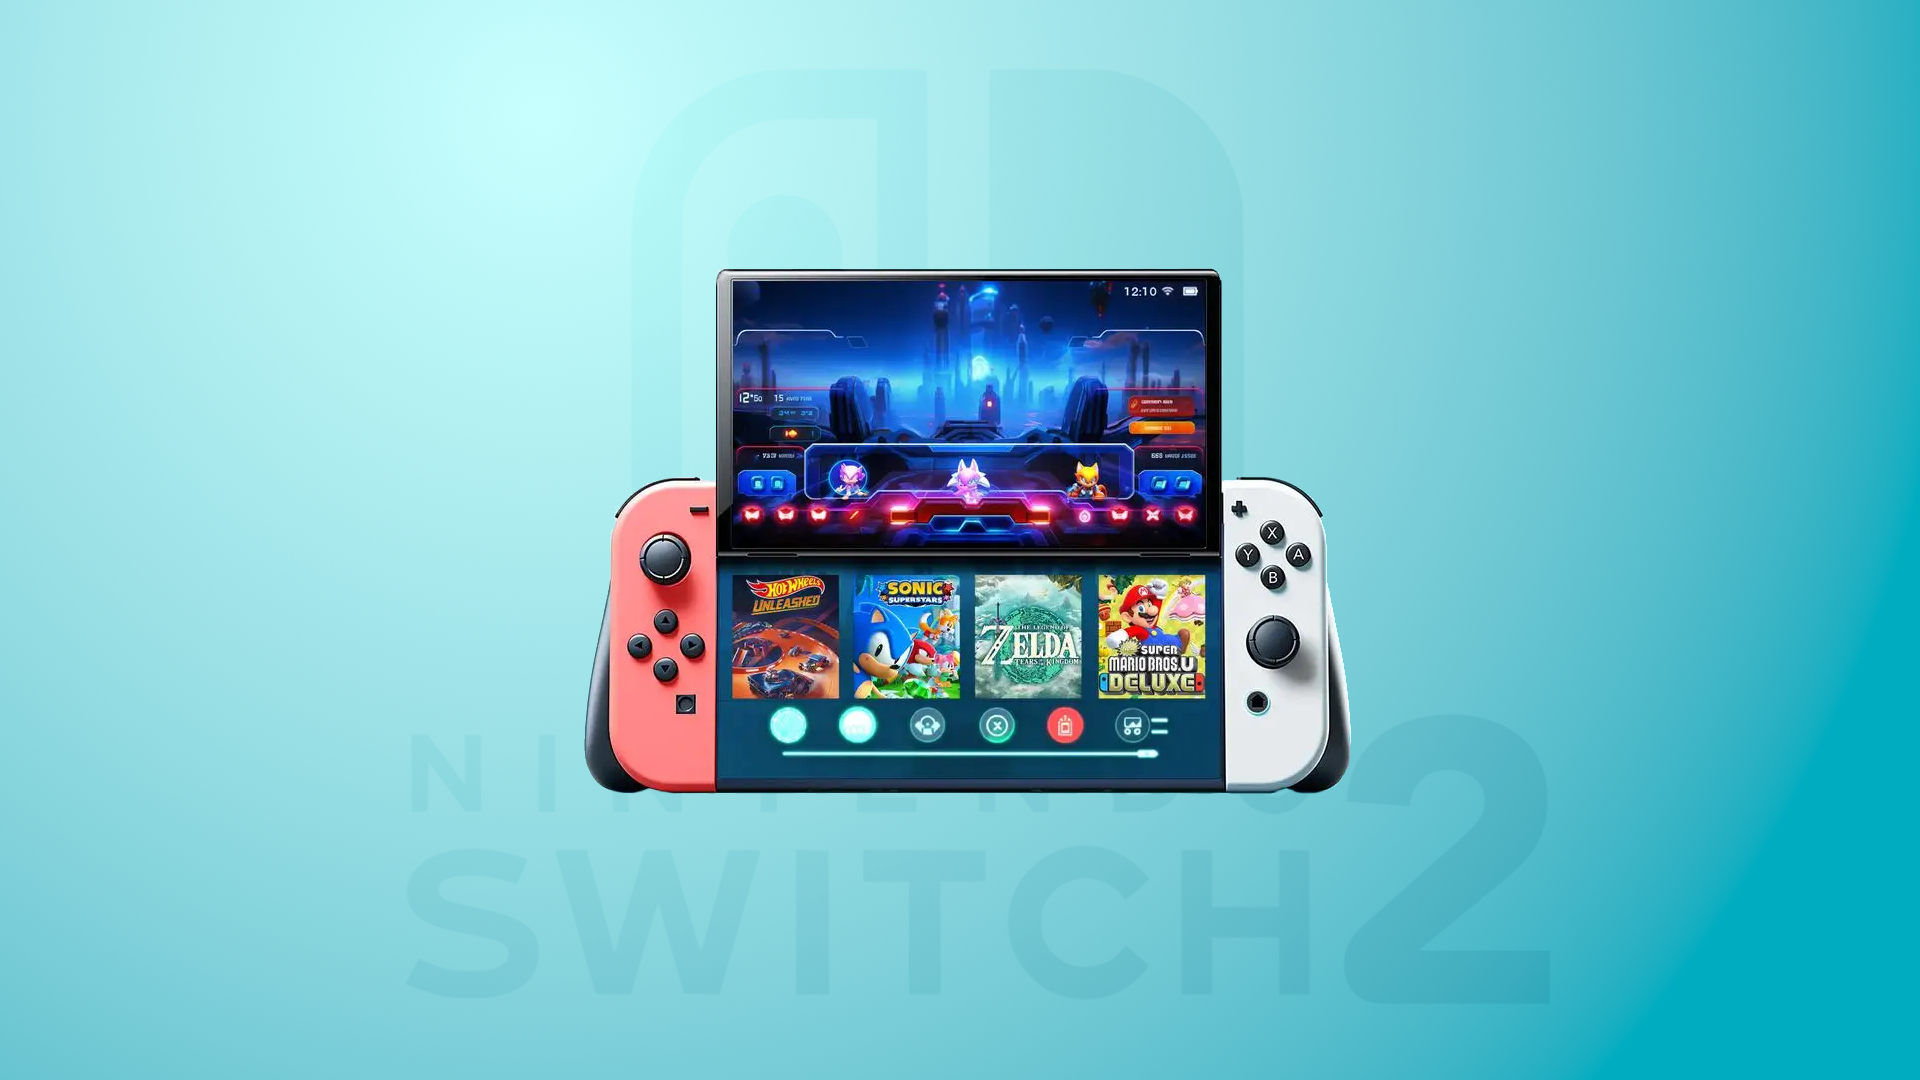 Nintendo Direct September 2023 - Nintendo Switch 2 to be revealed